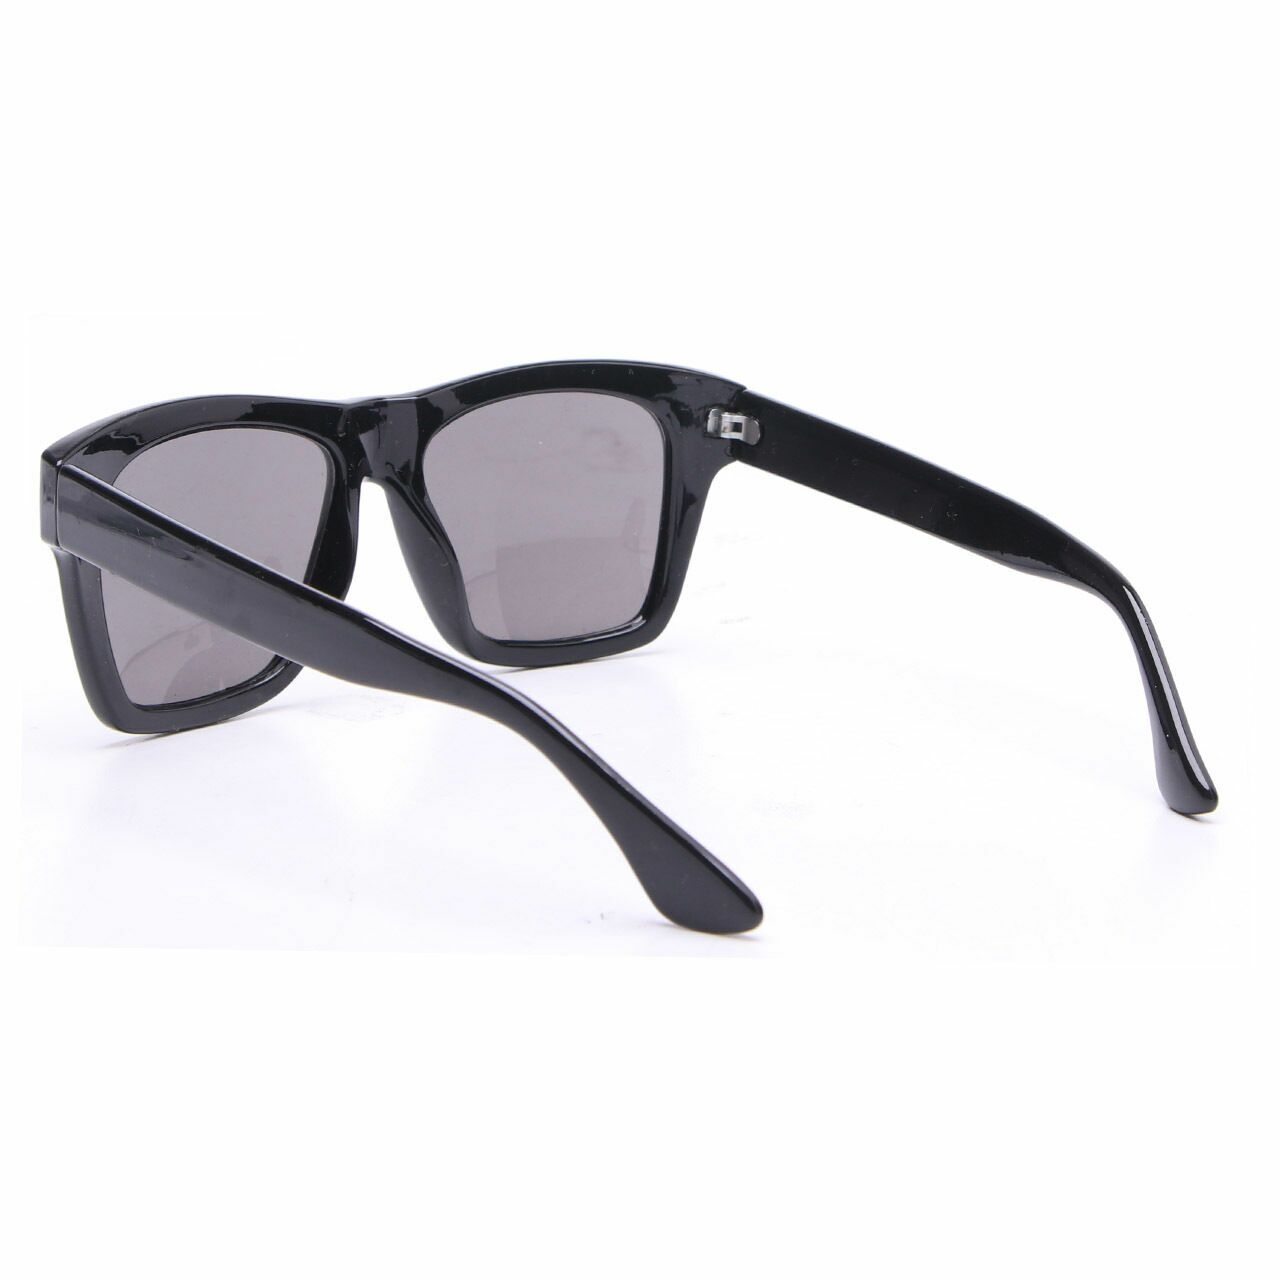 H&M Black Sunglasses